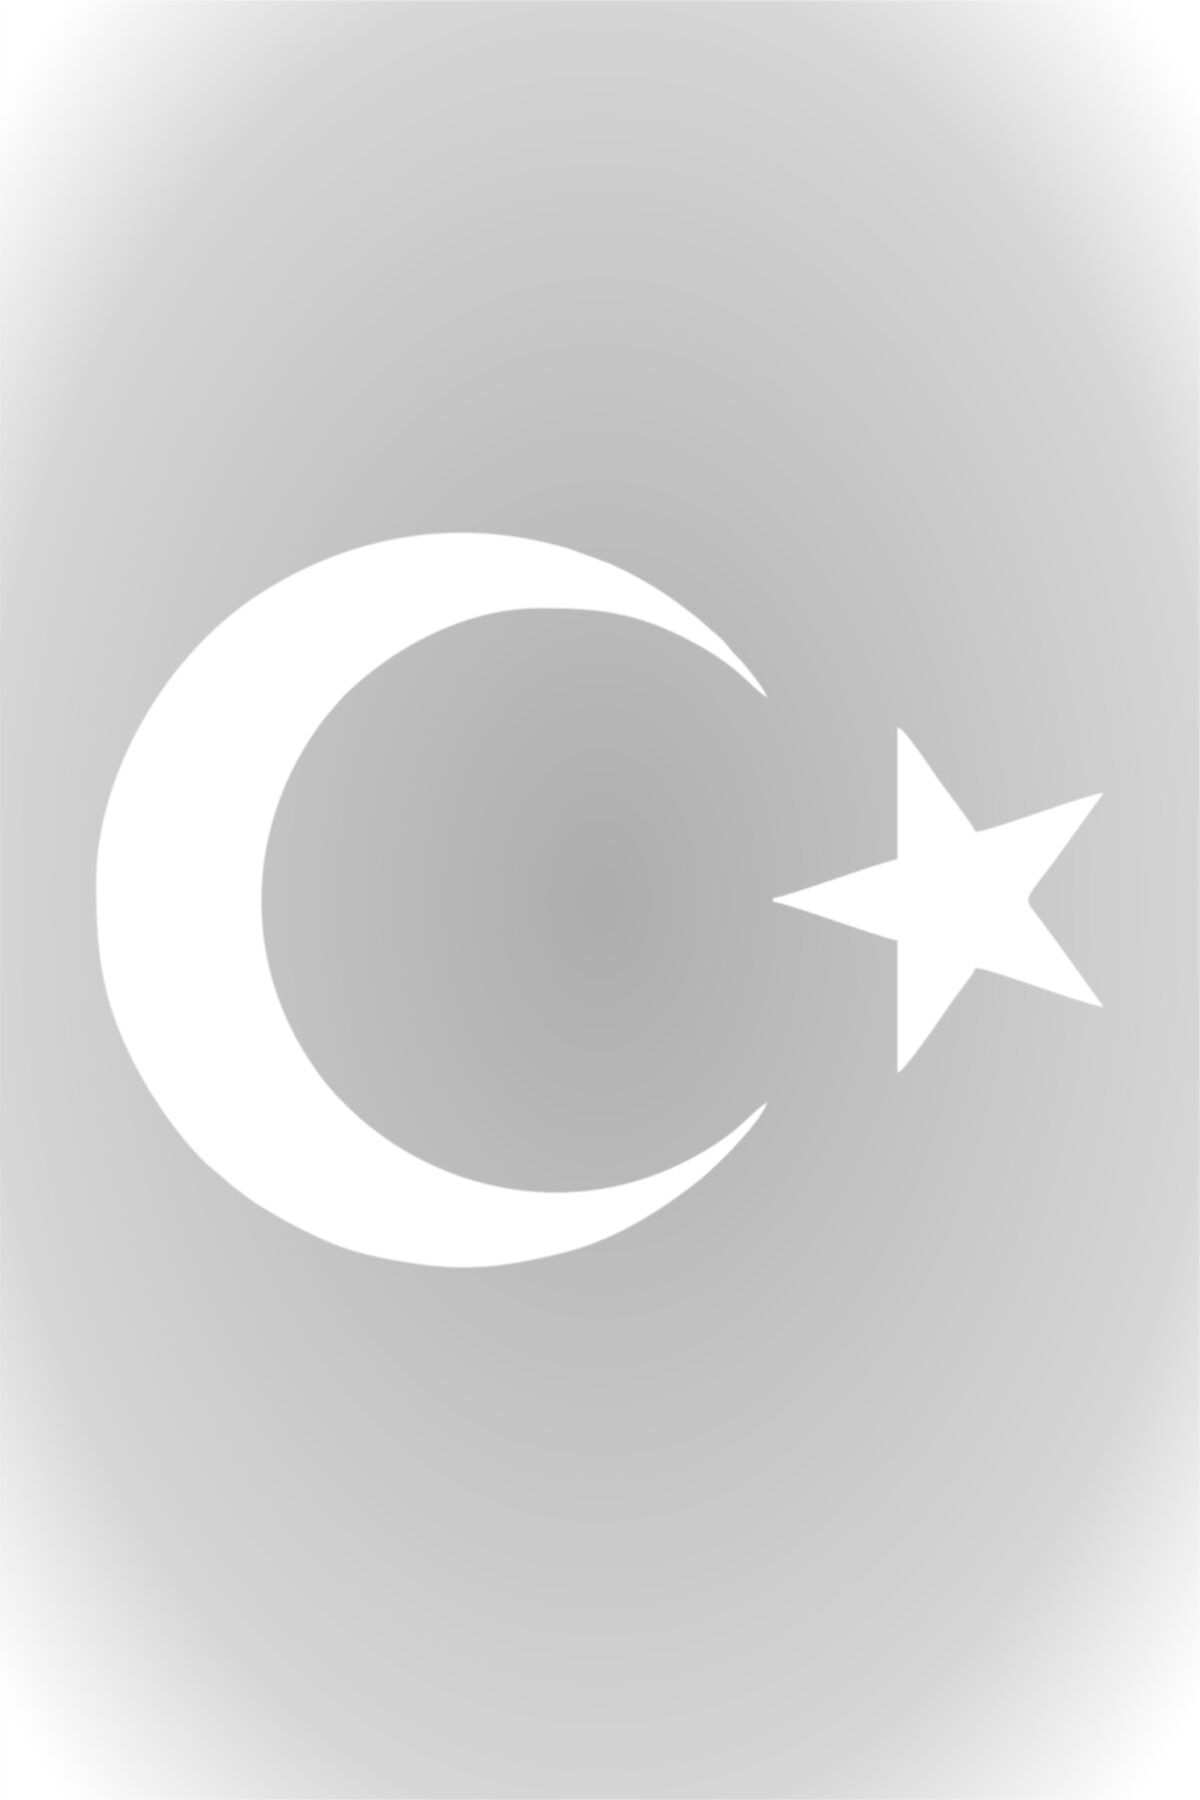 Quart Aksesuar 30 Cm Beyaz Ay Yıldız Sticker Türk Bayrağı Sticker